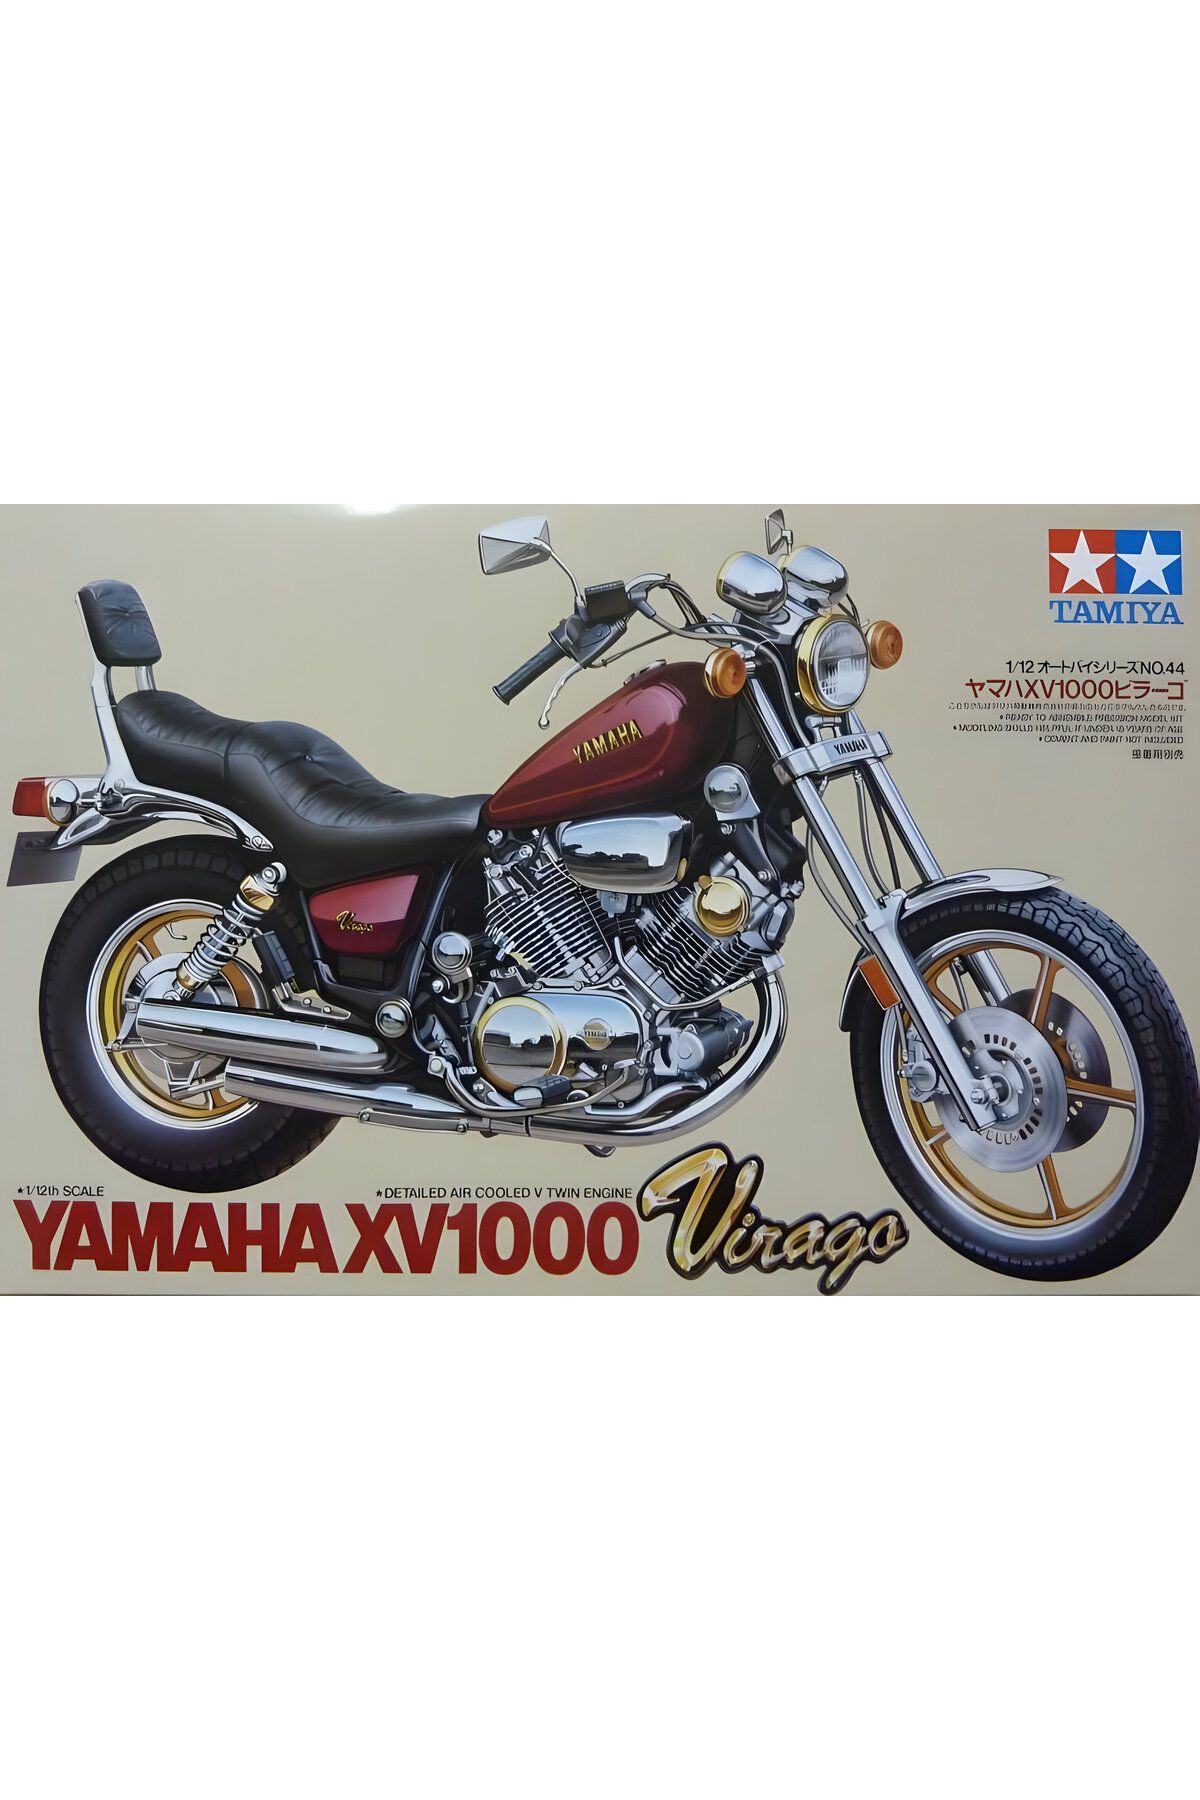 TAMIYA 1/12 Yamaha Virago Xv1000 Plastik Motosiklet Maket Kiti, Demonte Hobi Seti